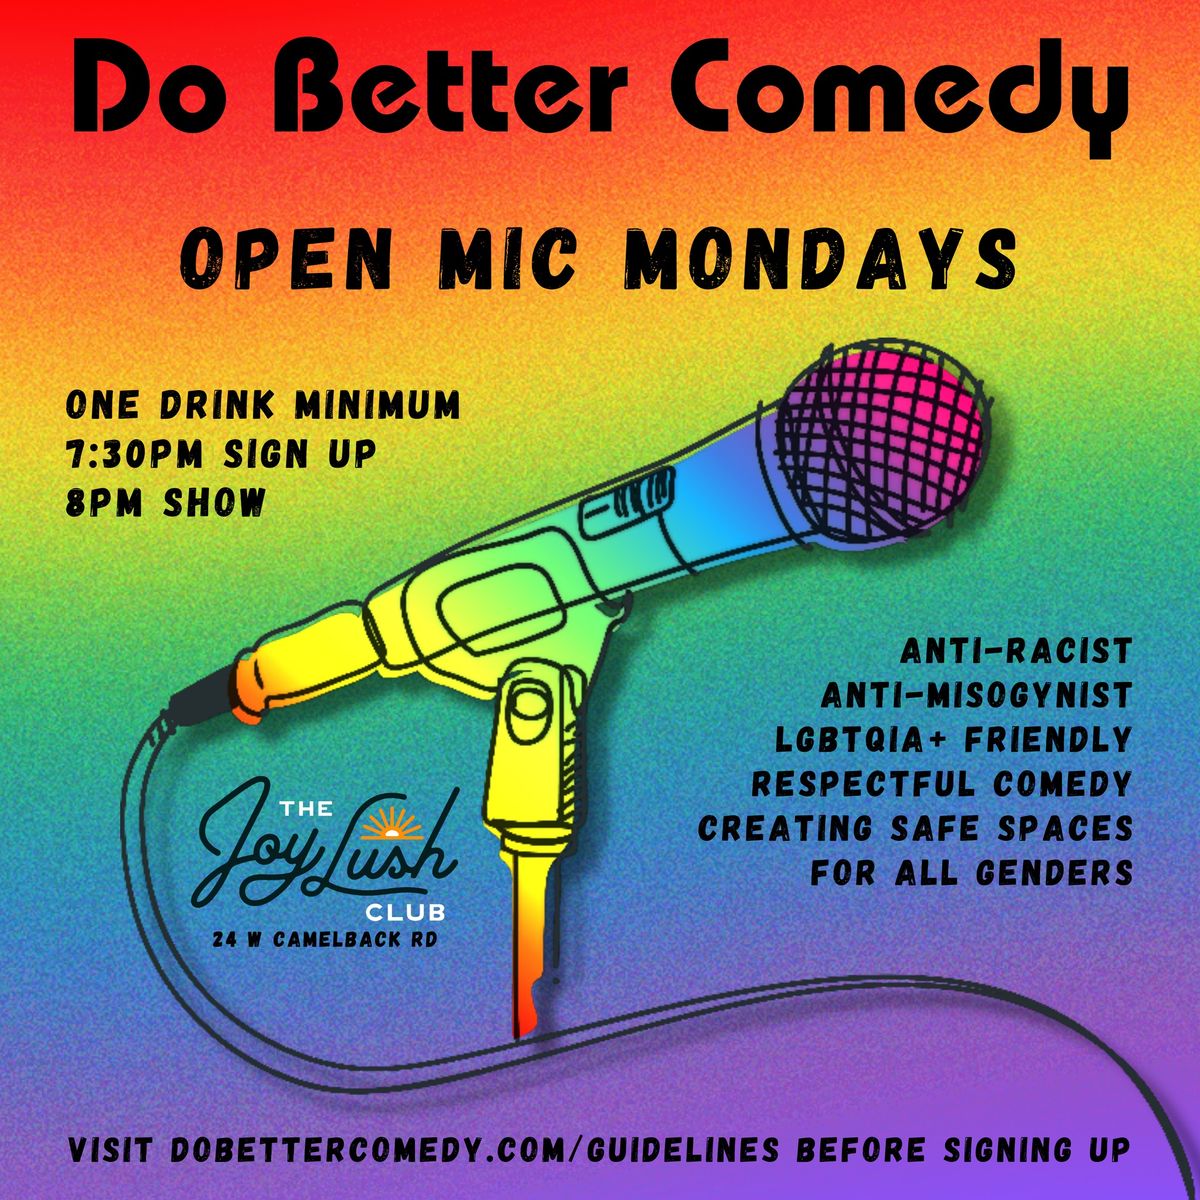 Do Better Comedy Open Mic Mondays at The Joy Lush Club